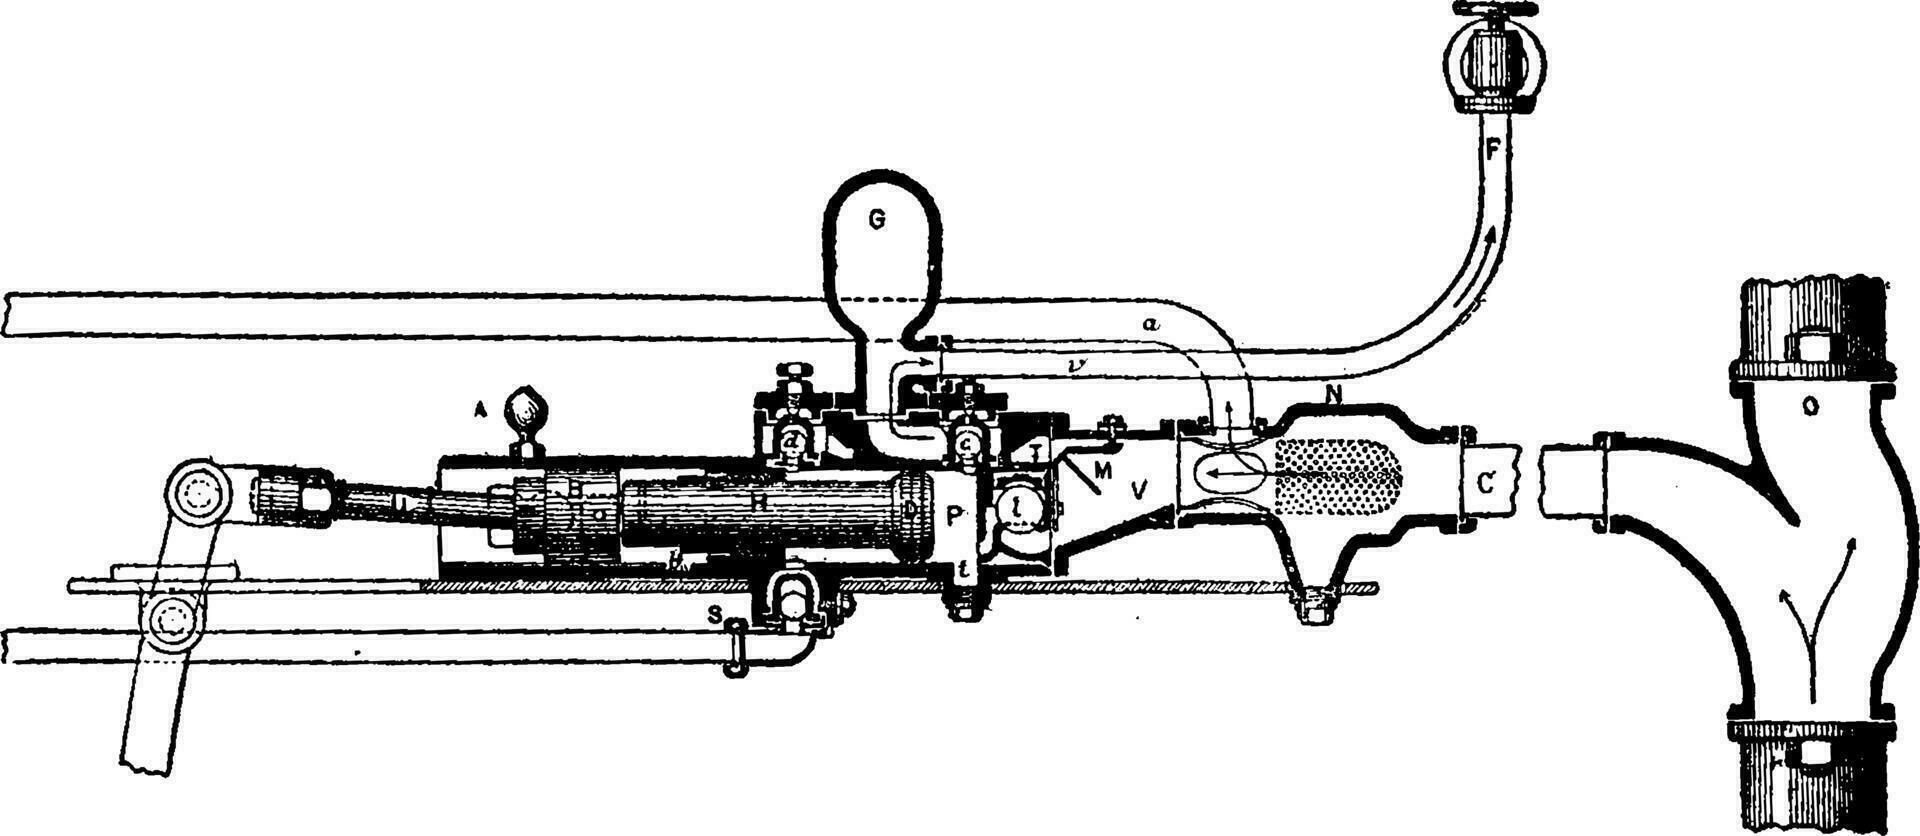 Sektion von das Injektor Pumpe Chiazzari, Jahrgang Gravur. vektor